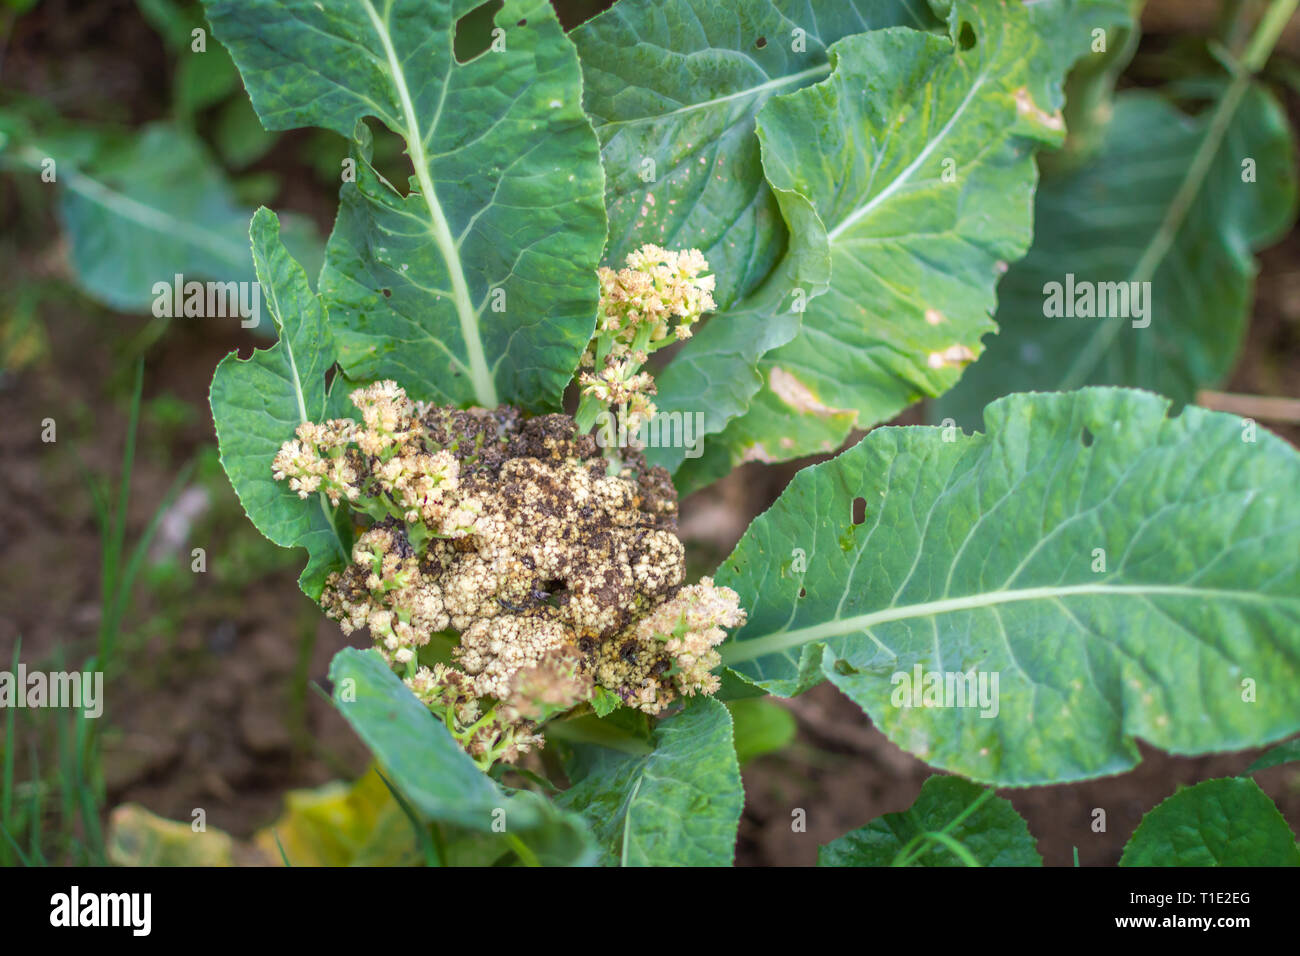 Severe fungal attack of Sclerotinia sclerotiorum on cauliflower Stock Photo